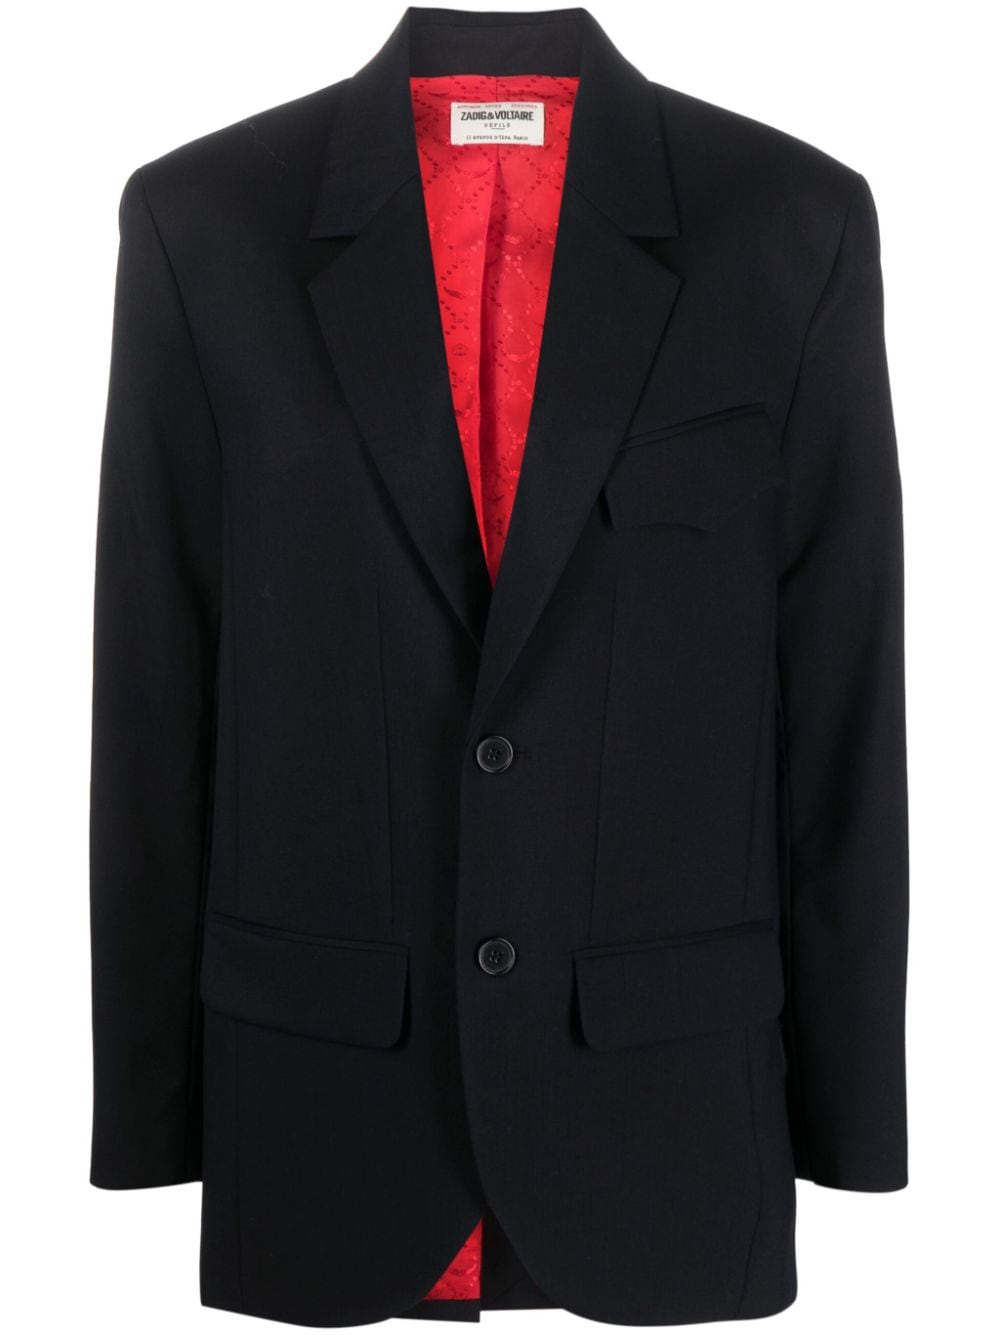 Image 1 of Zadig&Voltaire Vivi tailored-cut blazer